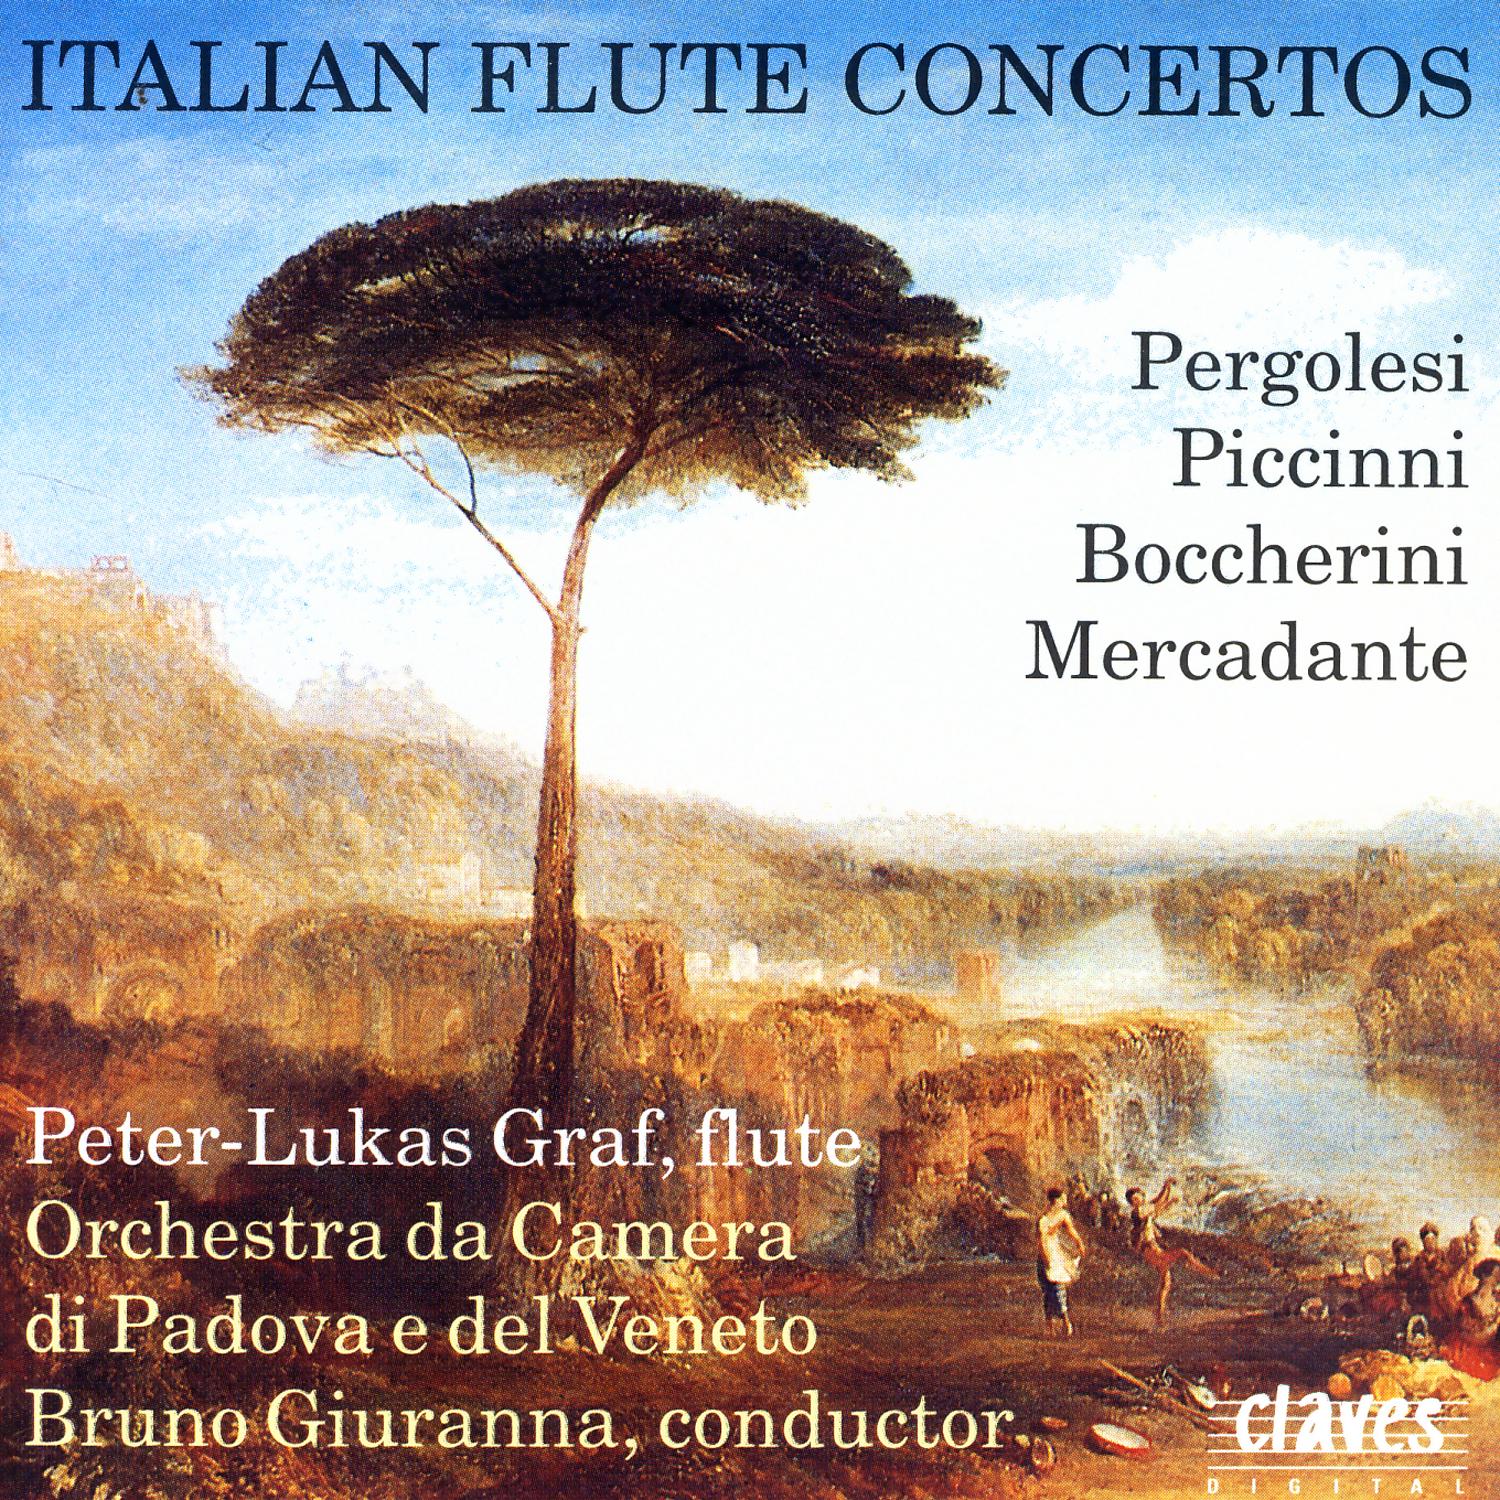 Flute Concerto in G Major: I. Spiritoso